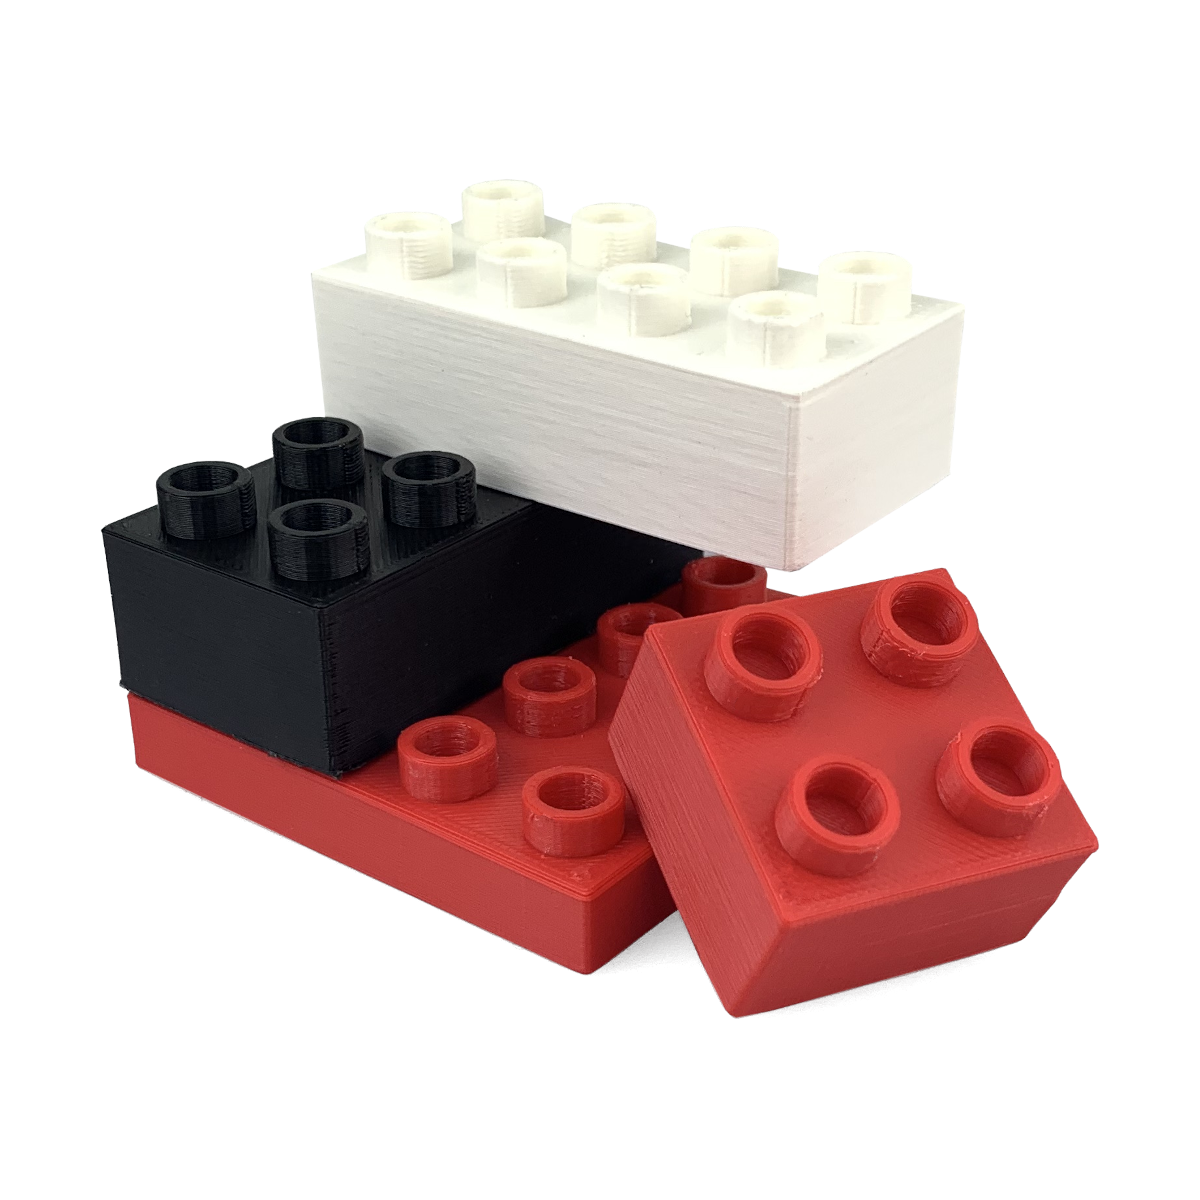 Fiberlogy ABS PLUS 3D printing filament legos interlocking brick prints